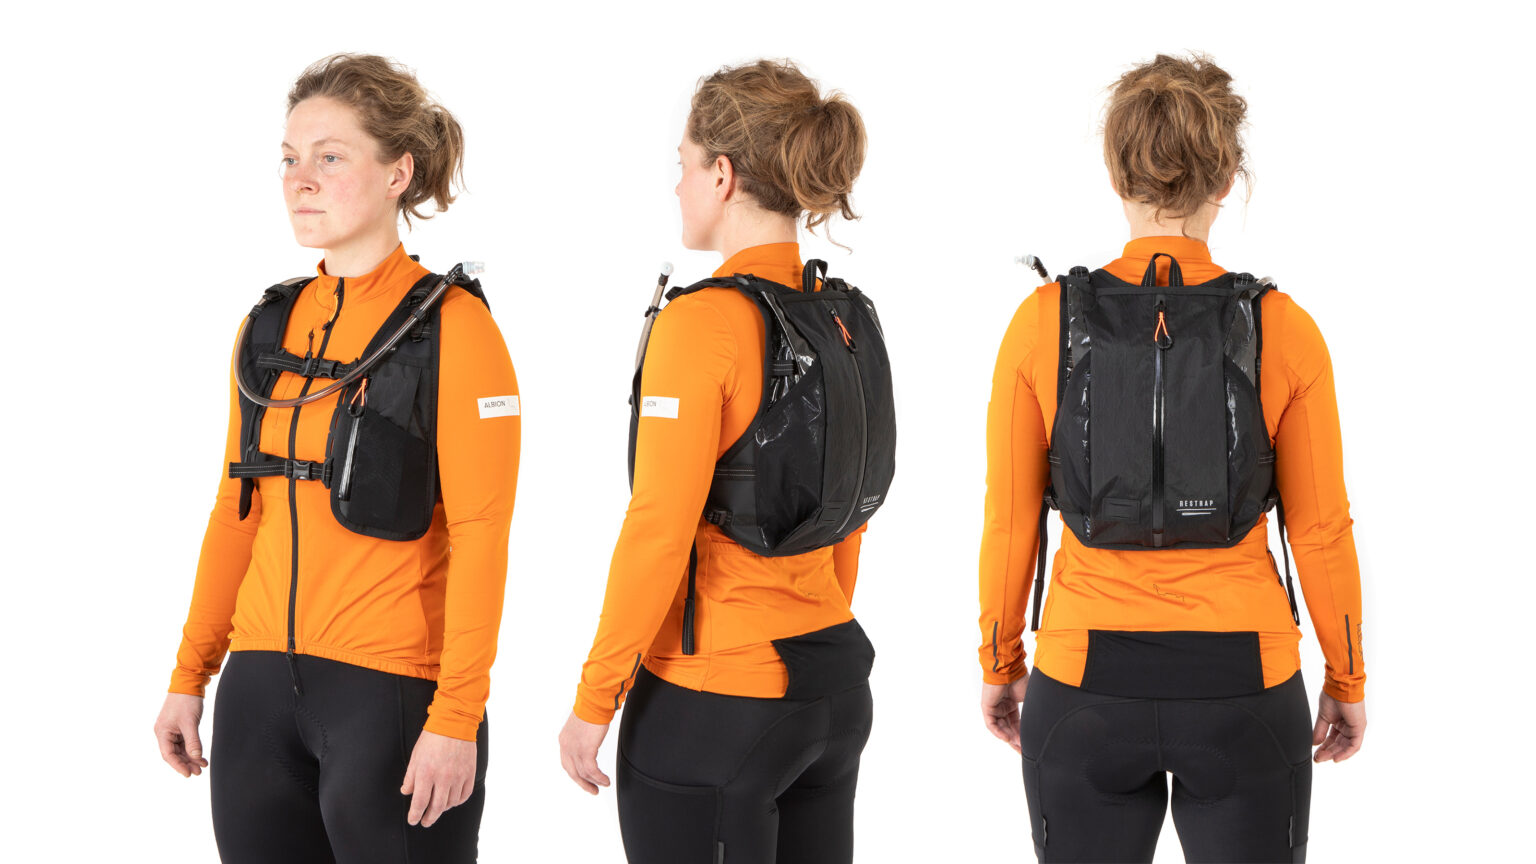 Restrap Race Hydration Vest lightweight bikepacking pack, side & back views